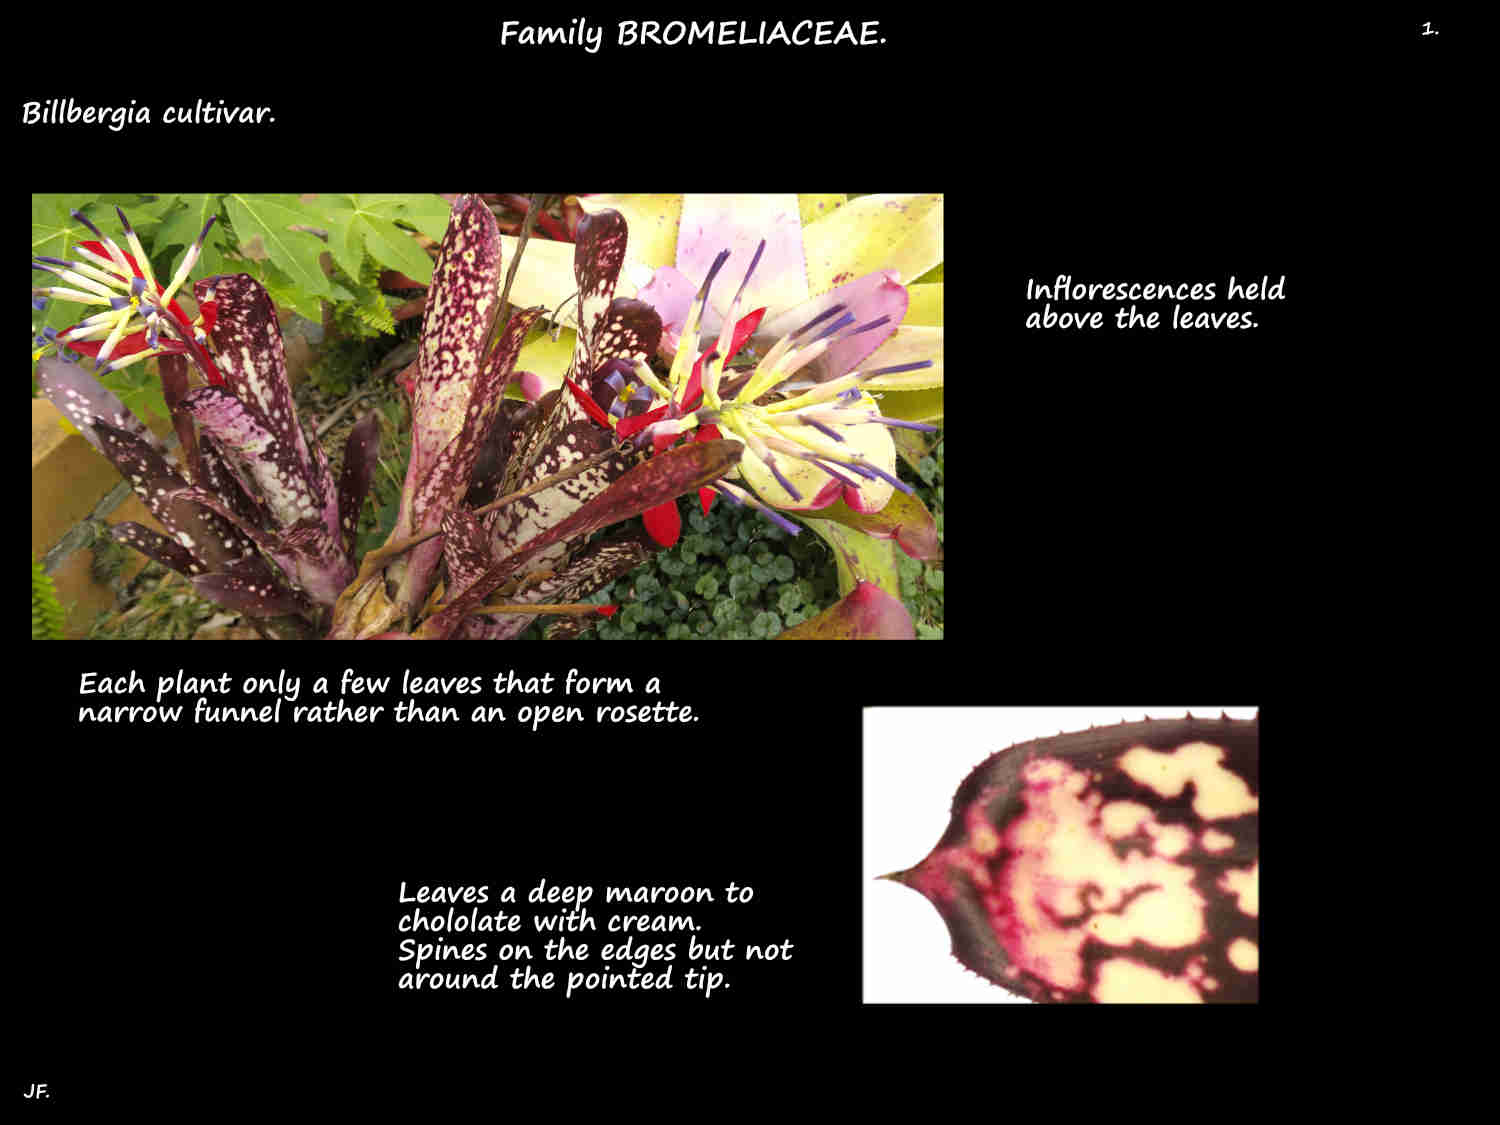 1 Billbergia cultivar plants & leaves